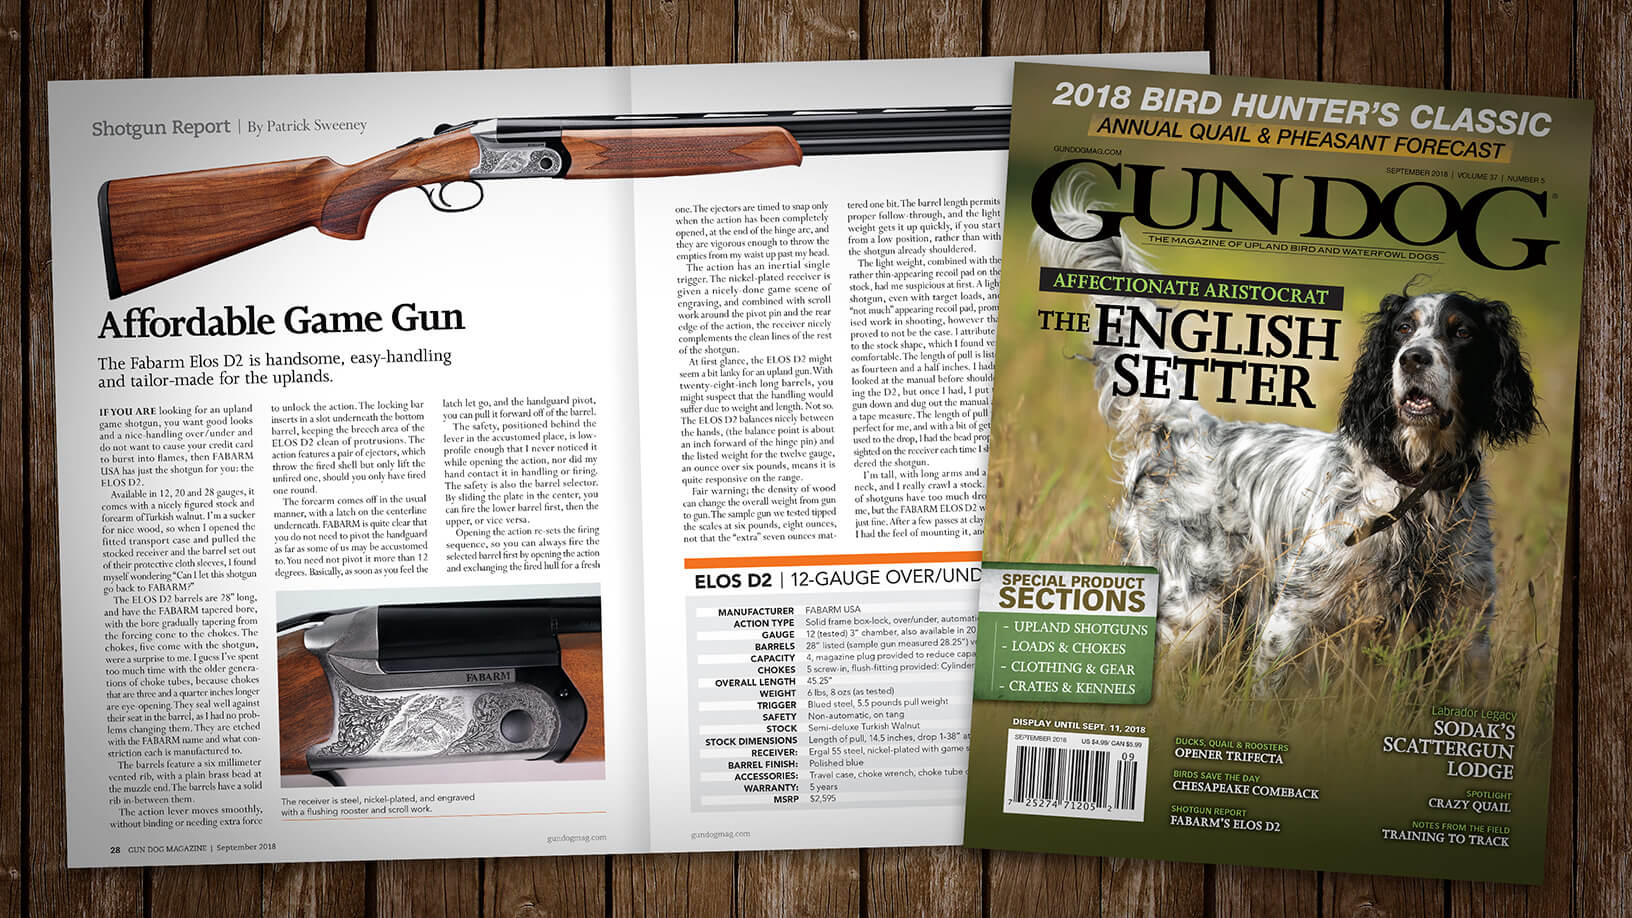 [Gun Dog: 09.18] Shotgun Report: Affordable Game Gun (Fabarm Elos D2) by Patrick Sweeney